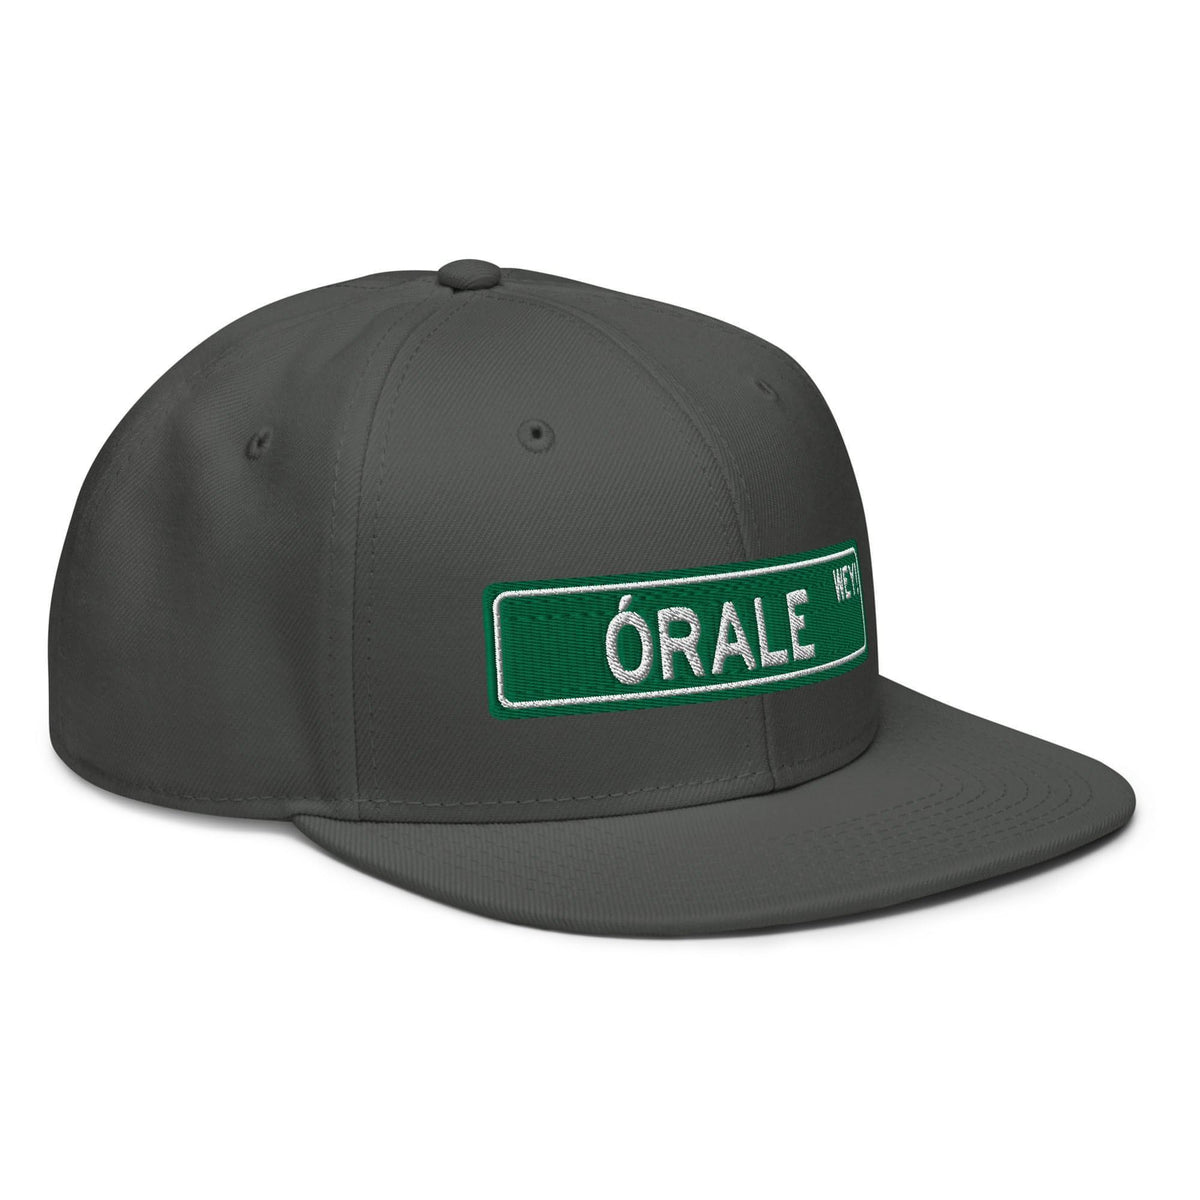 Órale Wey Snapback Hat  (Hell Yeah Dude)